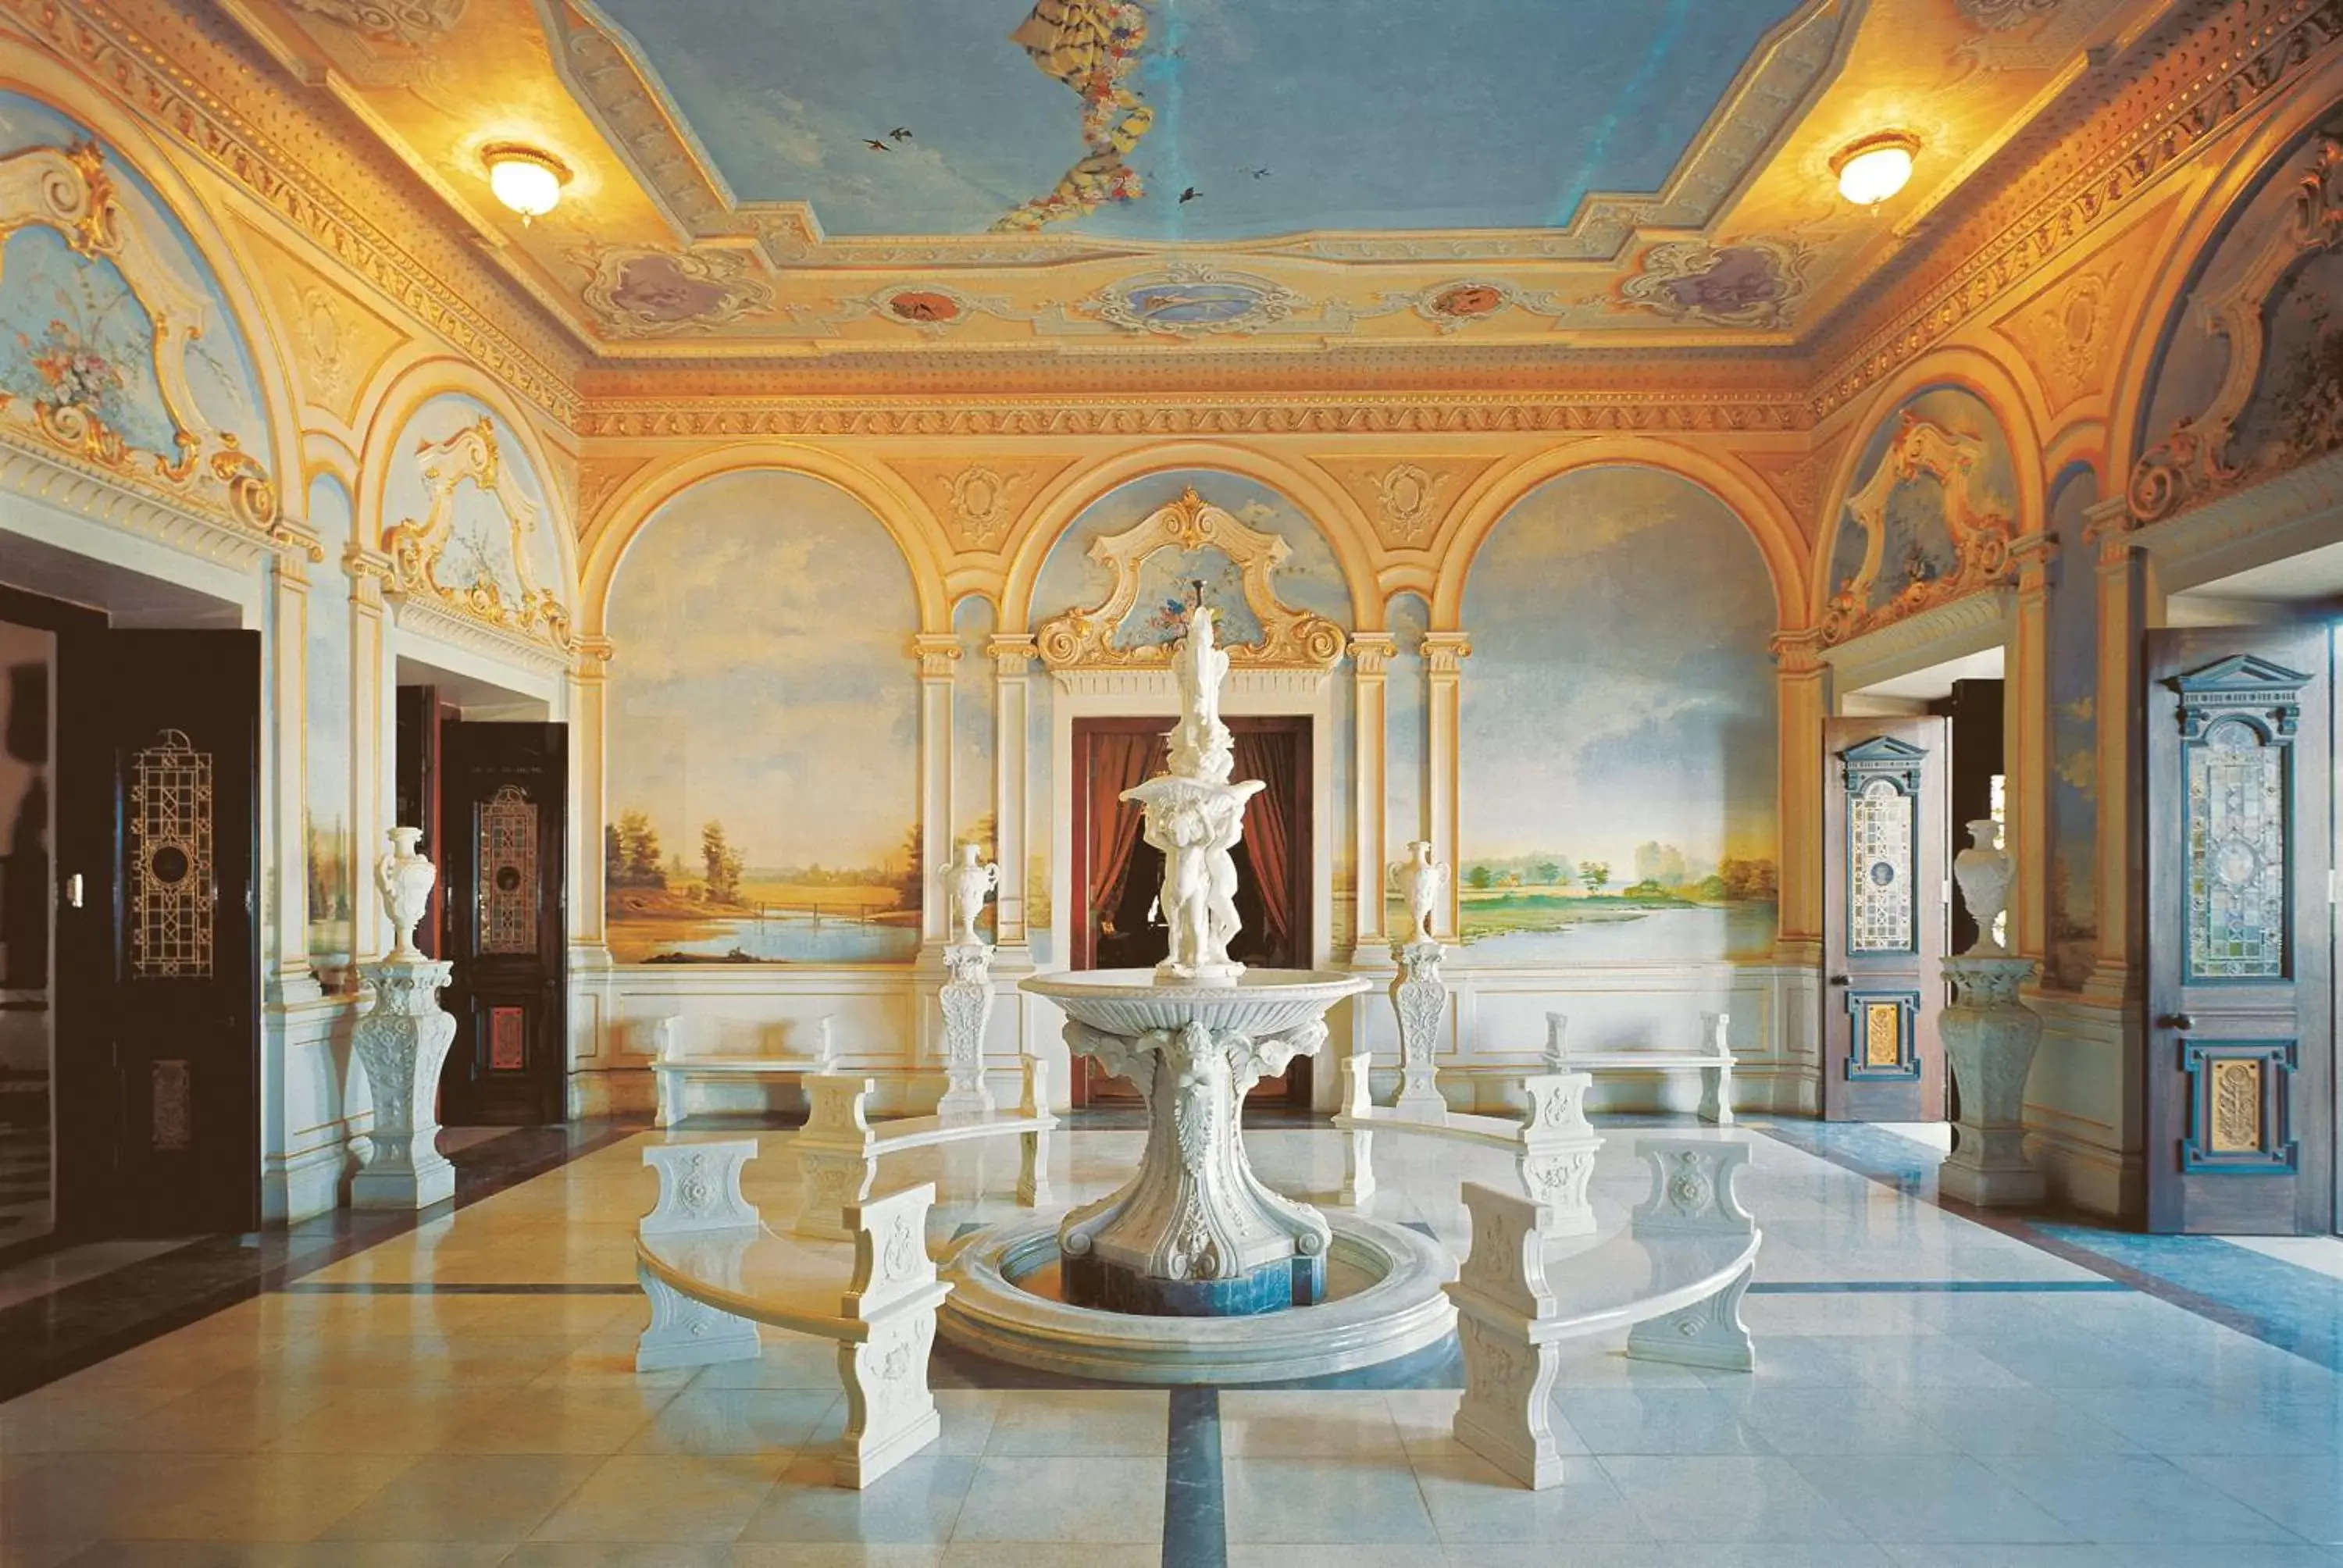 Decorative detail, Lobby/Reception in Taj Falaknuma Palace